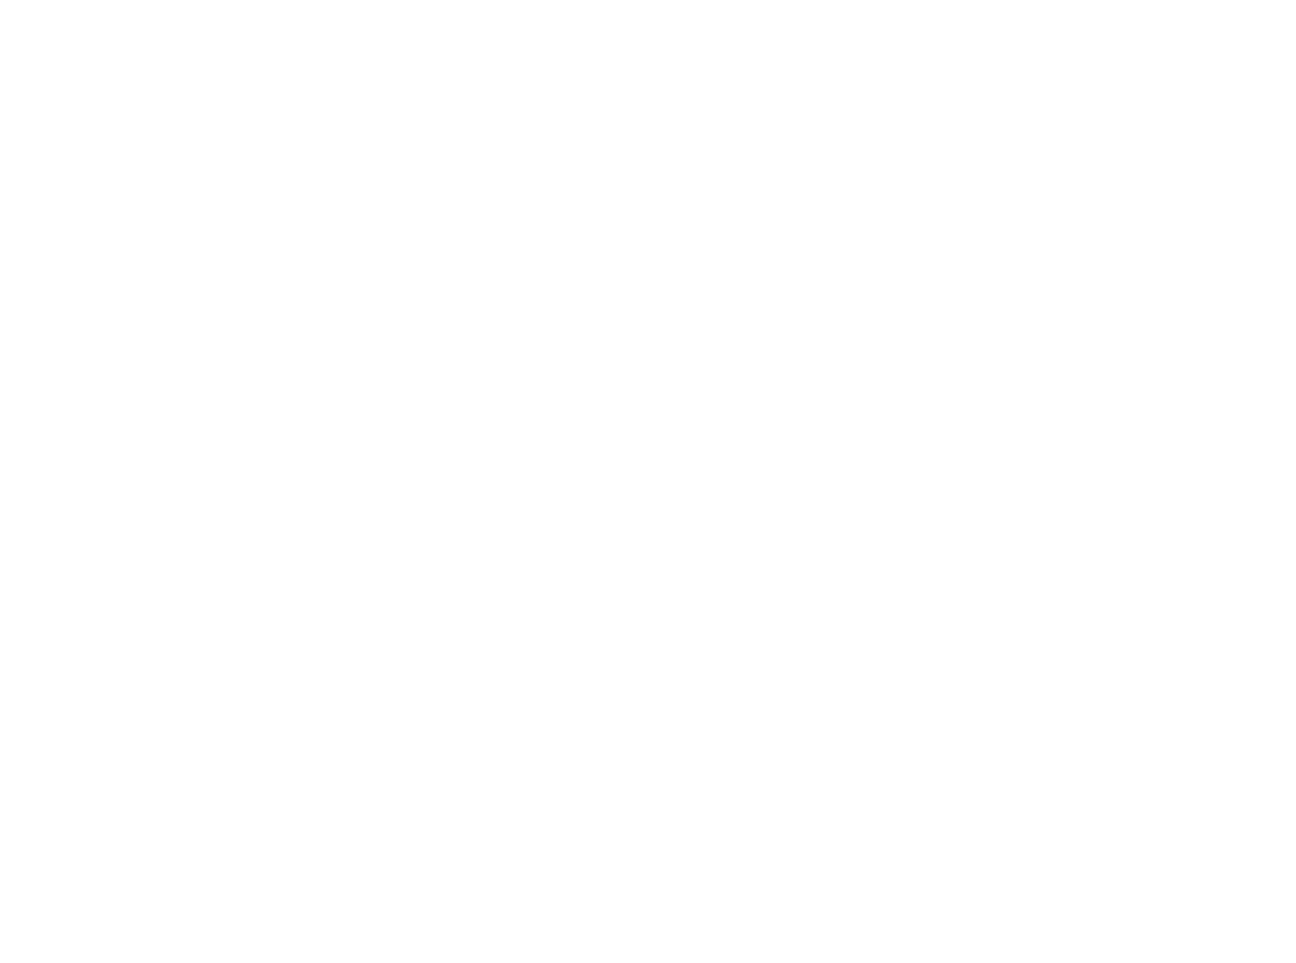 Network Theatre